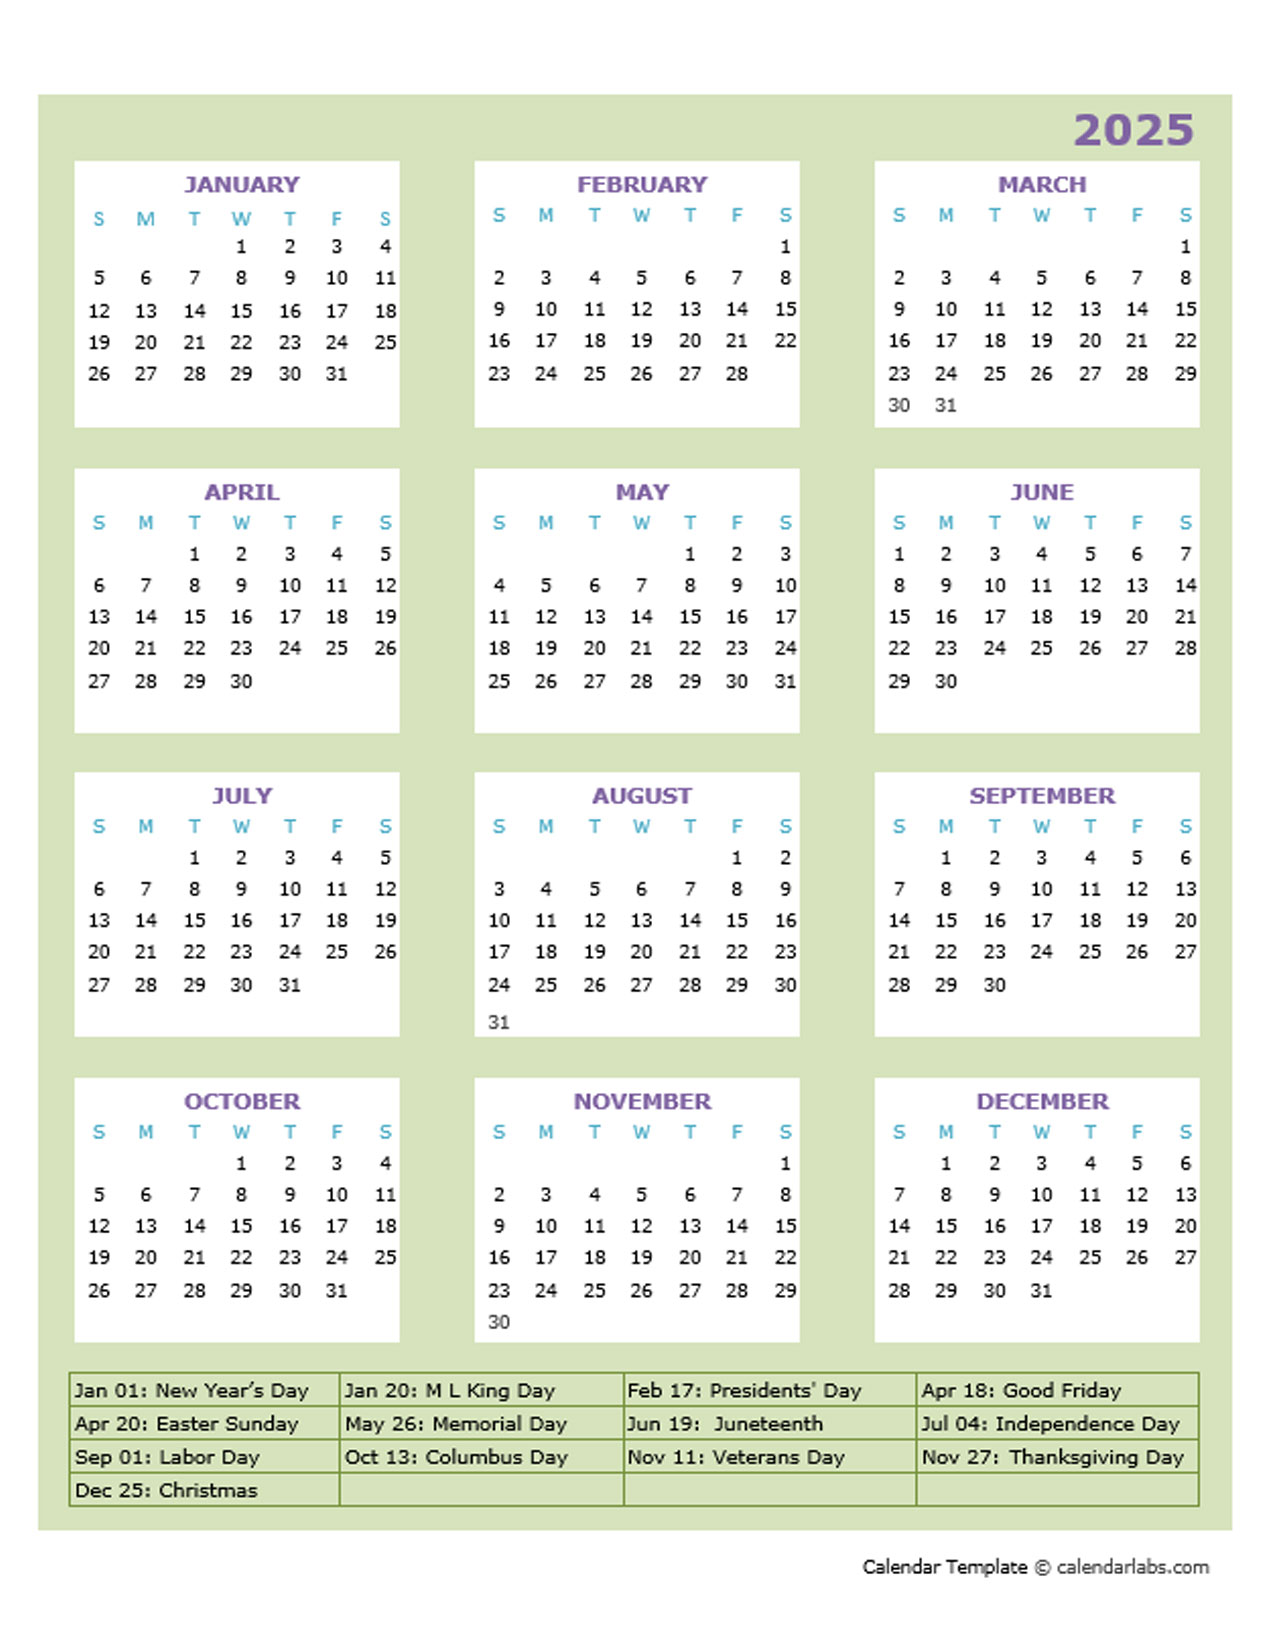 2025 Annual Calendar Design Template - Free Printable Templates